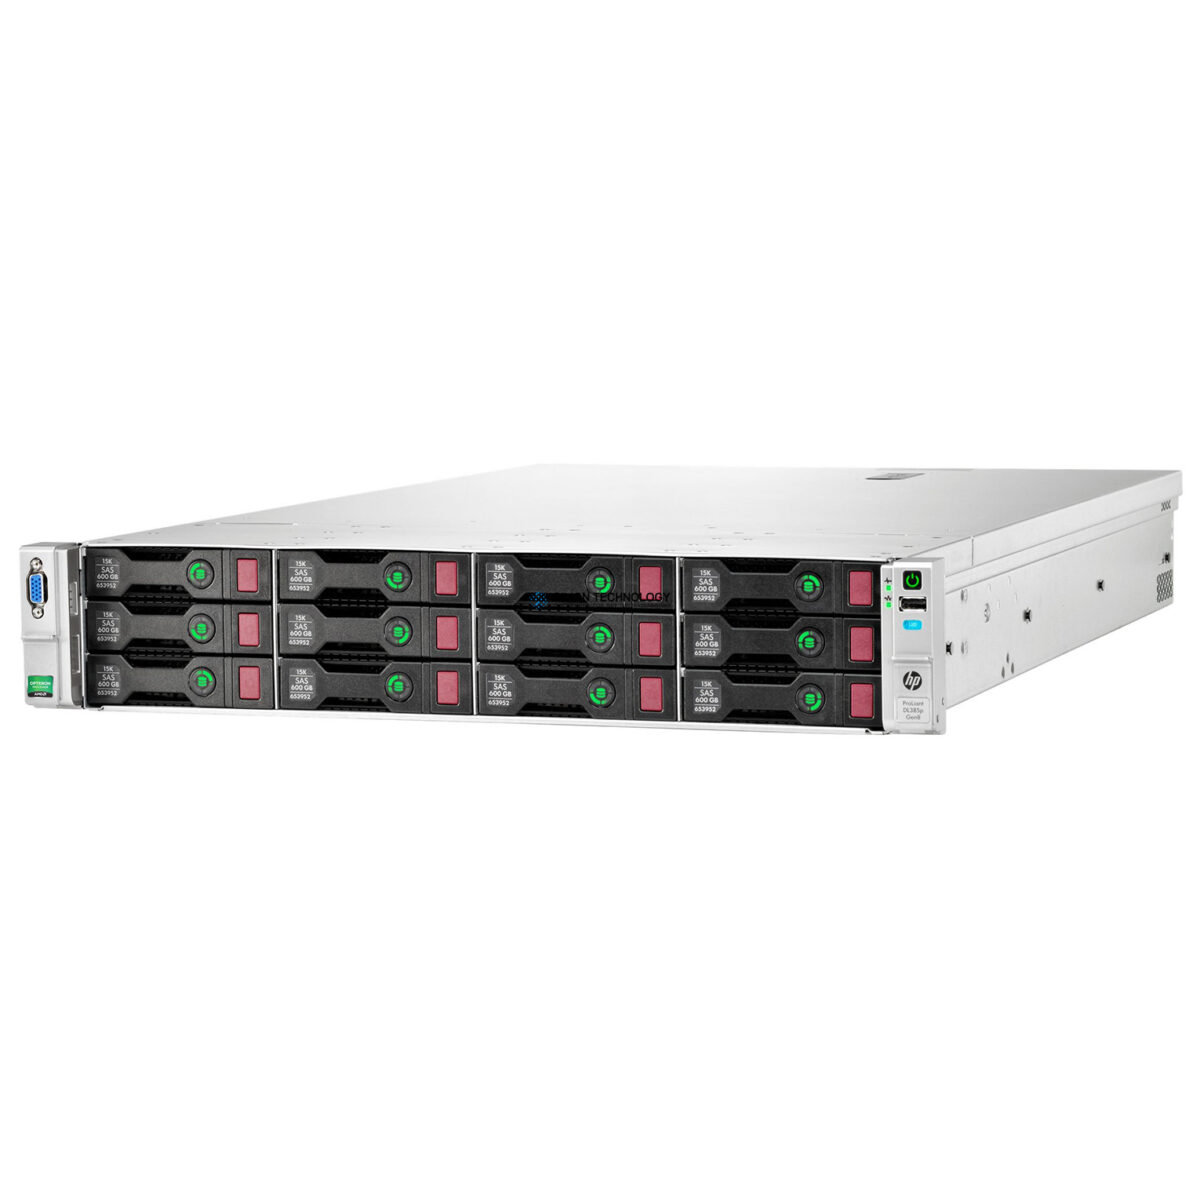 Сервер HP DL385P G8 12 LFF CONFIGURE-TO-ORDER SVR (669805-B21)